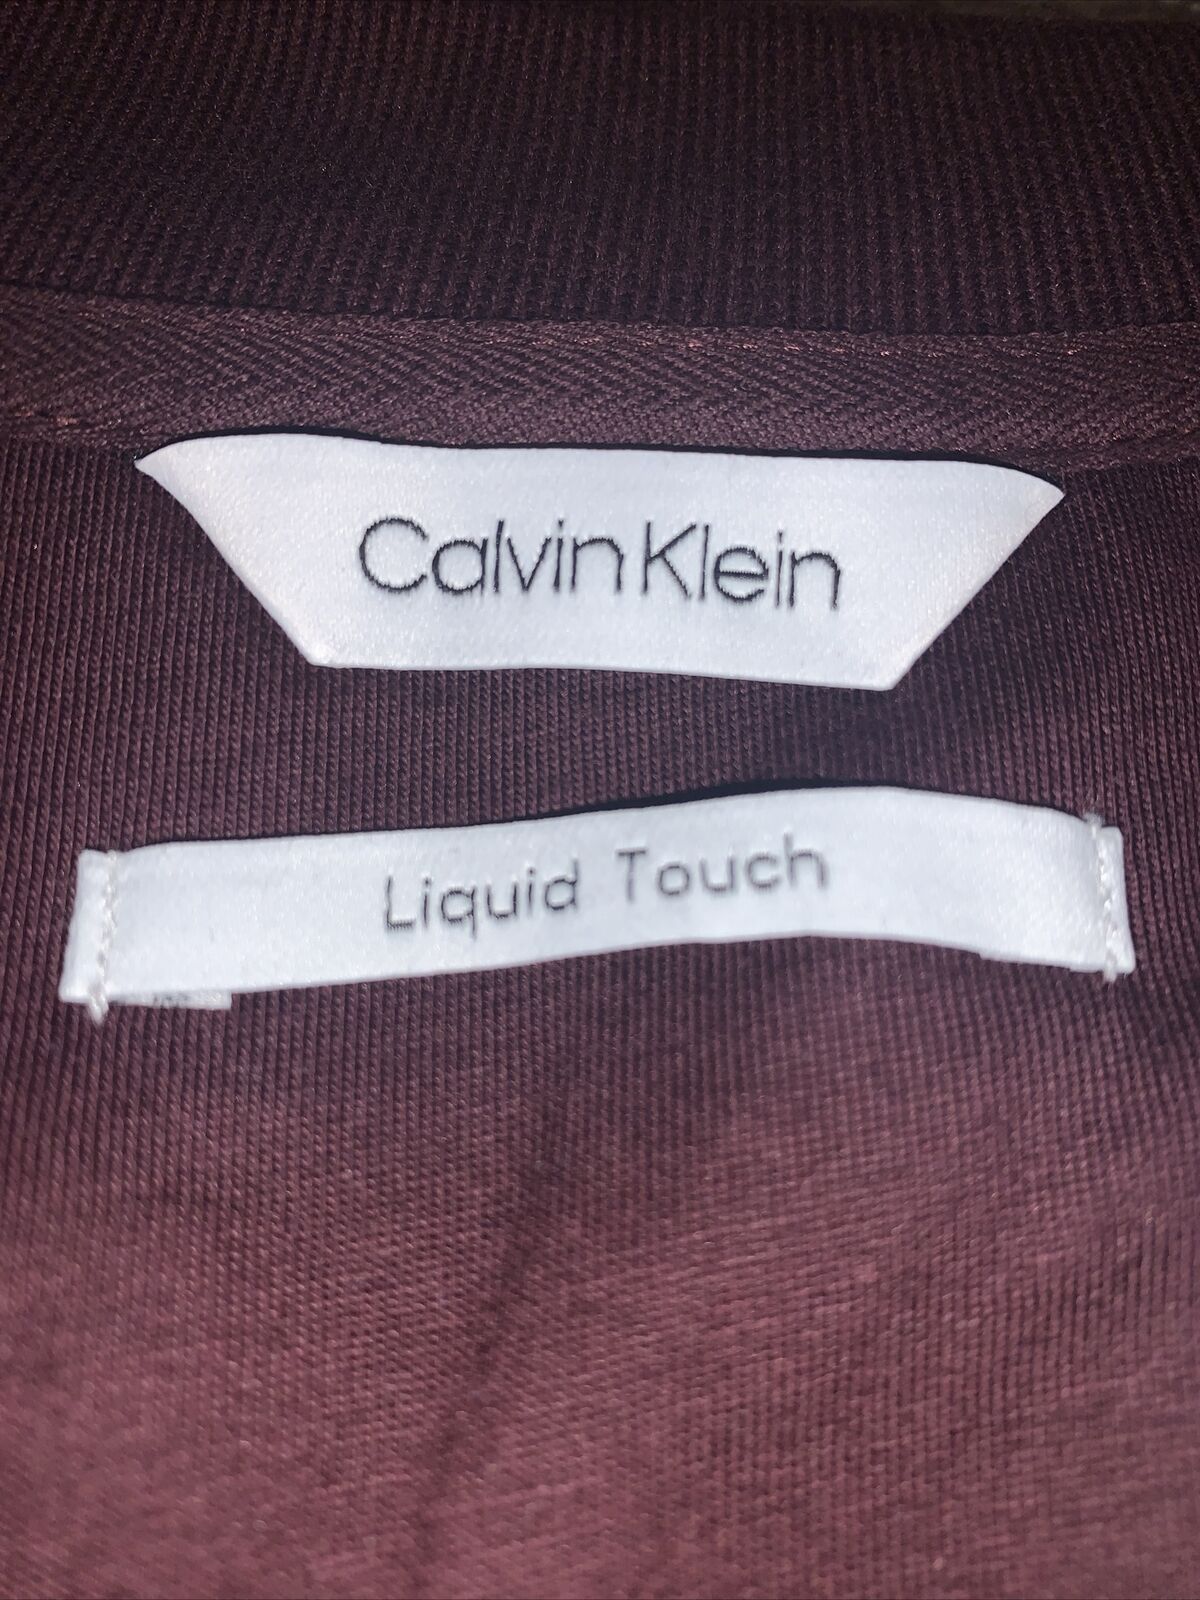 Calvin Klein Mens Liquid Touch Cotton Polo - LARGE